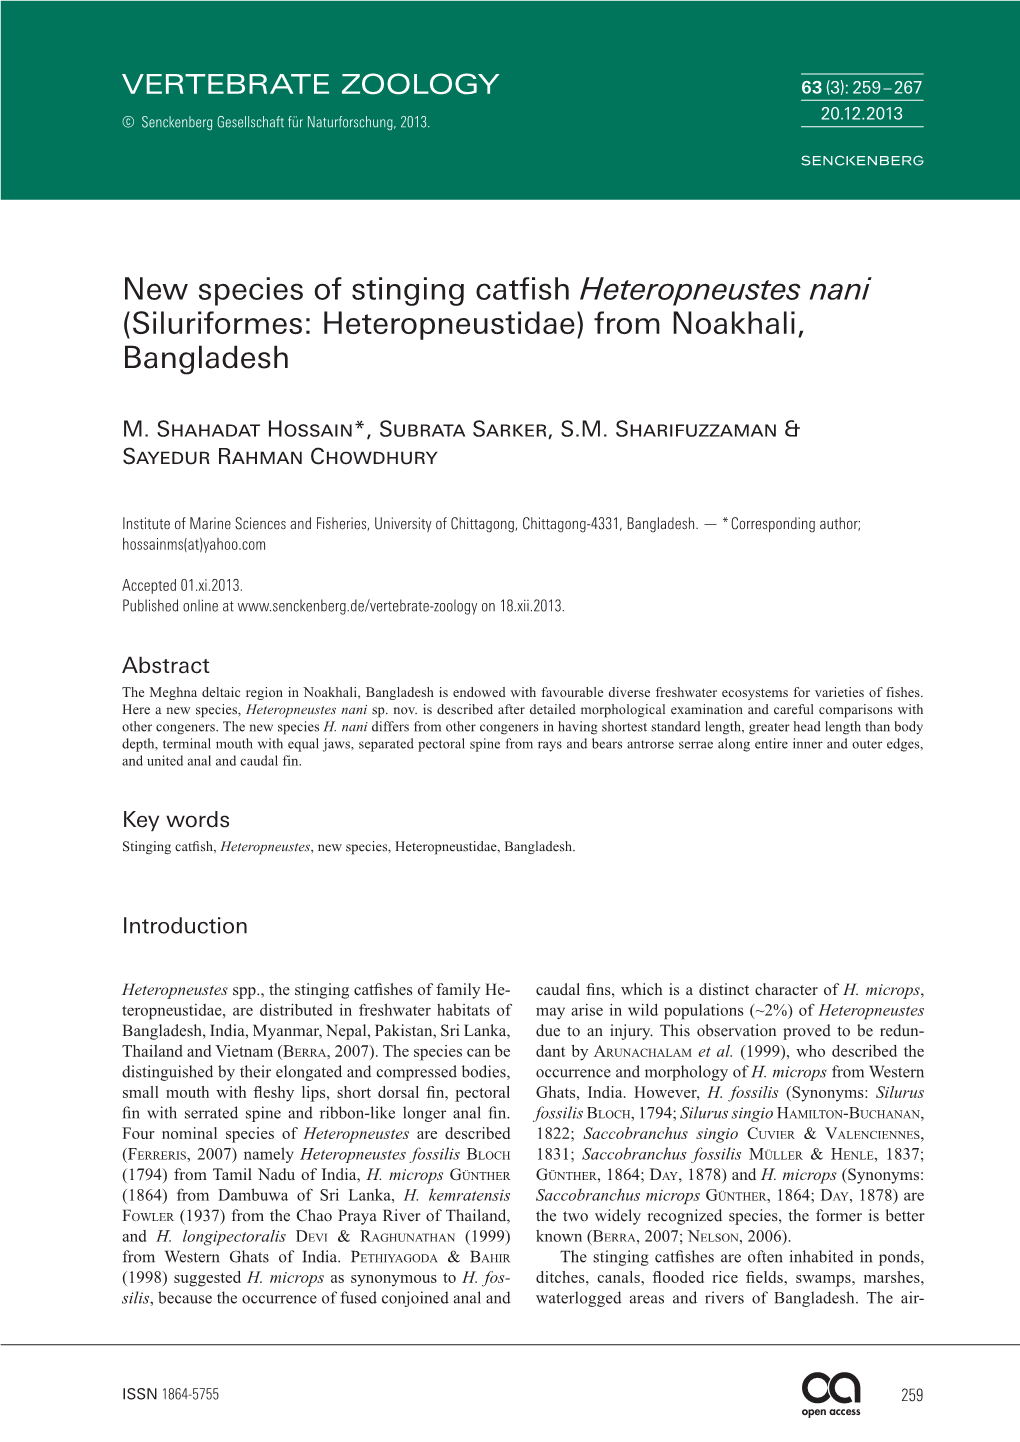 New Species of Stinging Catfish Heteropneustes Nani (Siluriformes: Heteropneustidae) from Noakhali, Bangladesh